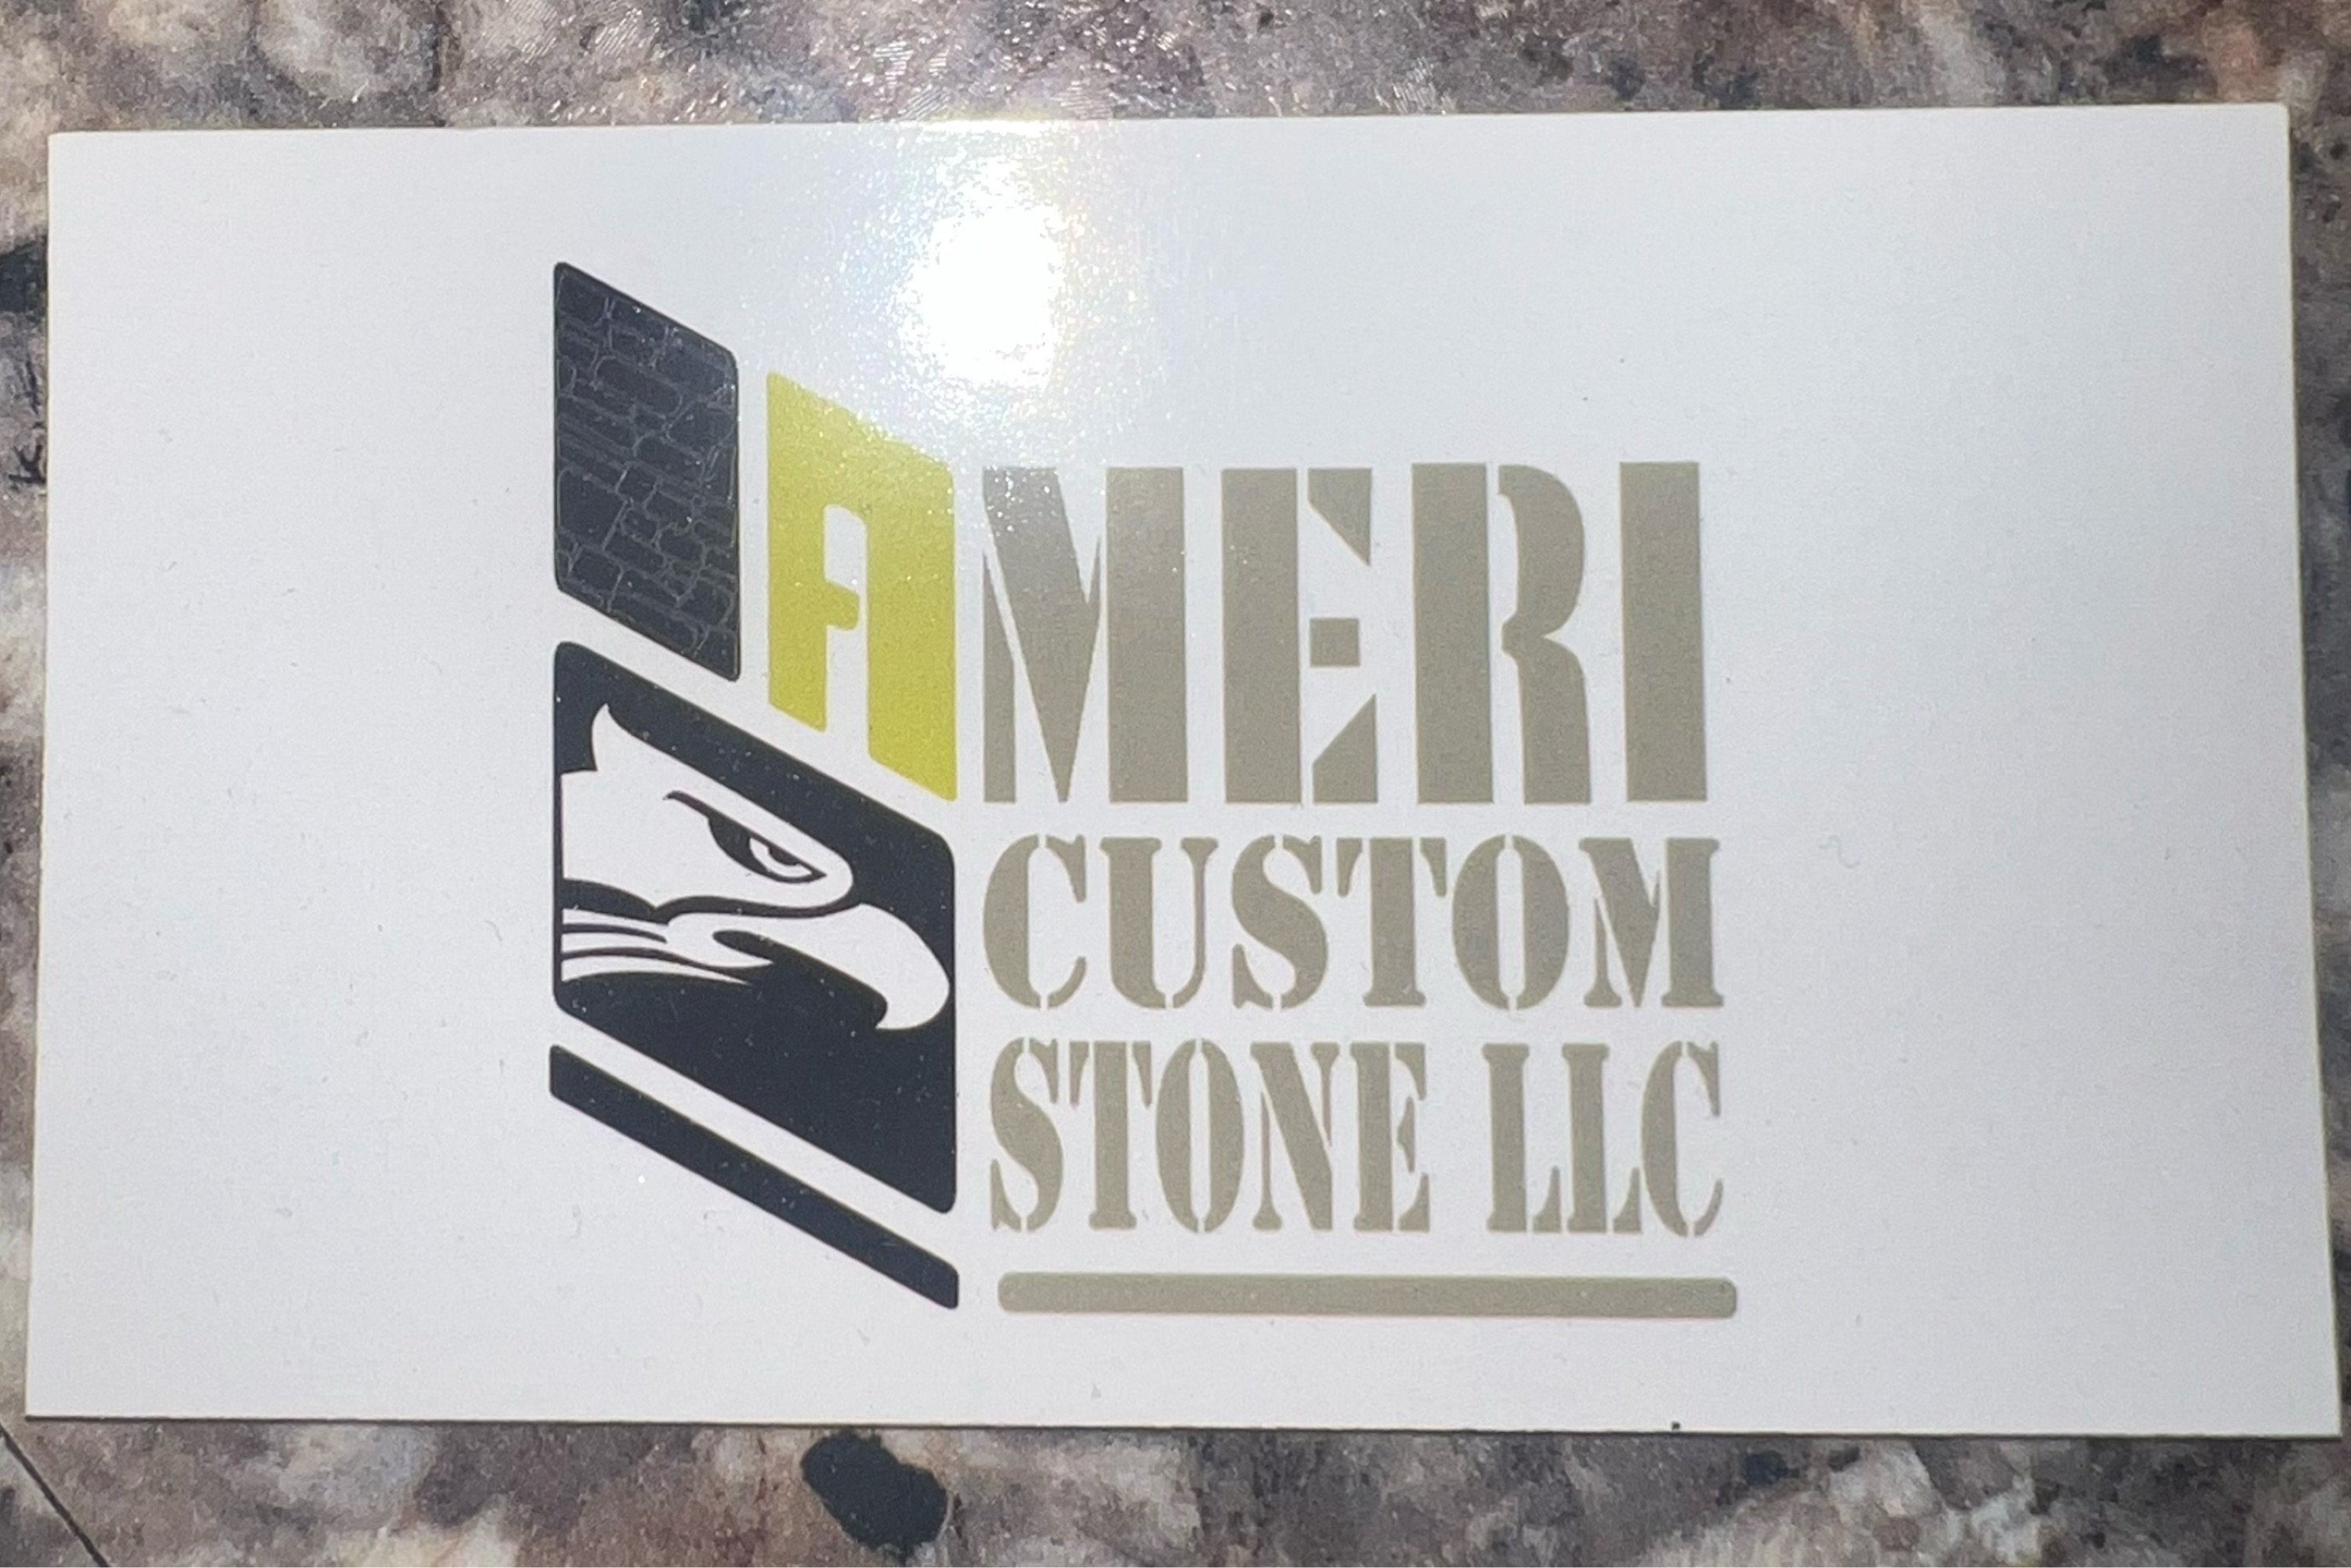 Ameri Custom Stone Logo